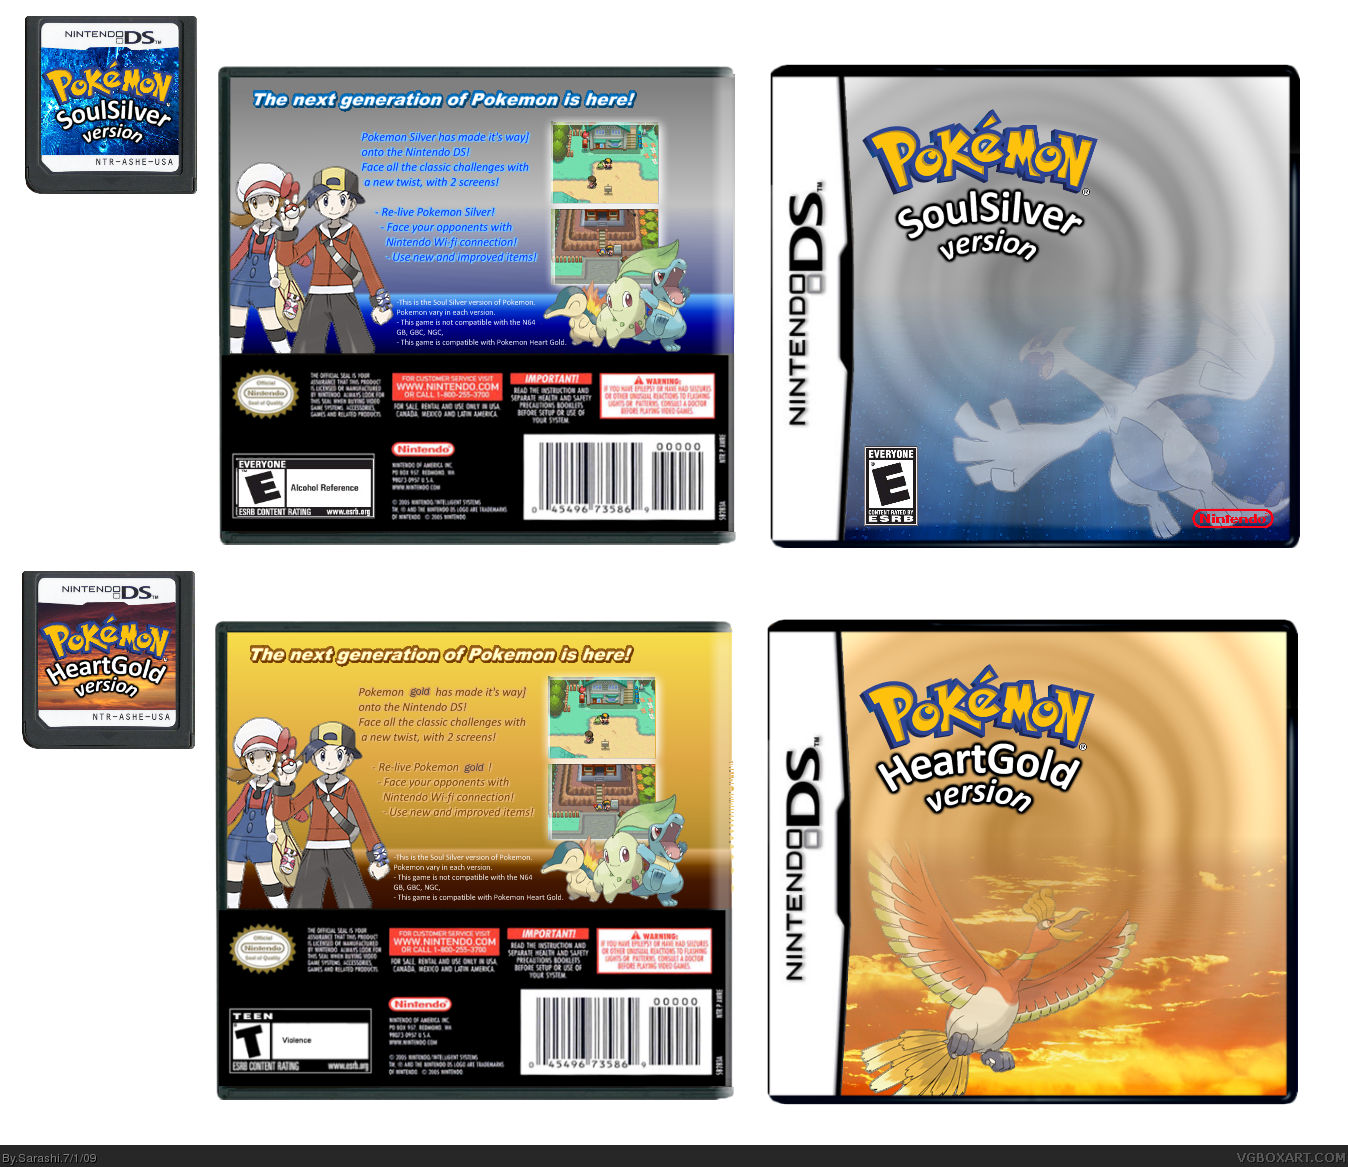 Pokemon Heart Gold and Soul Silver Version box cover